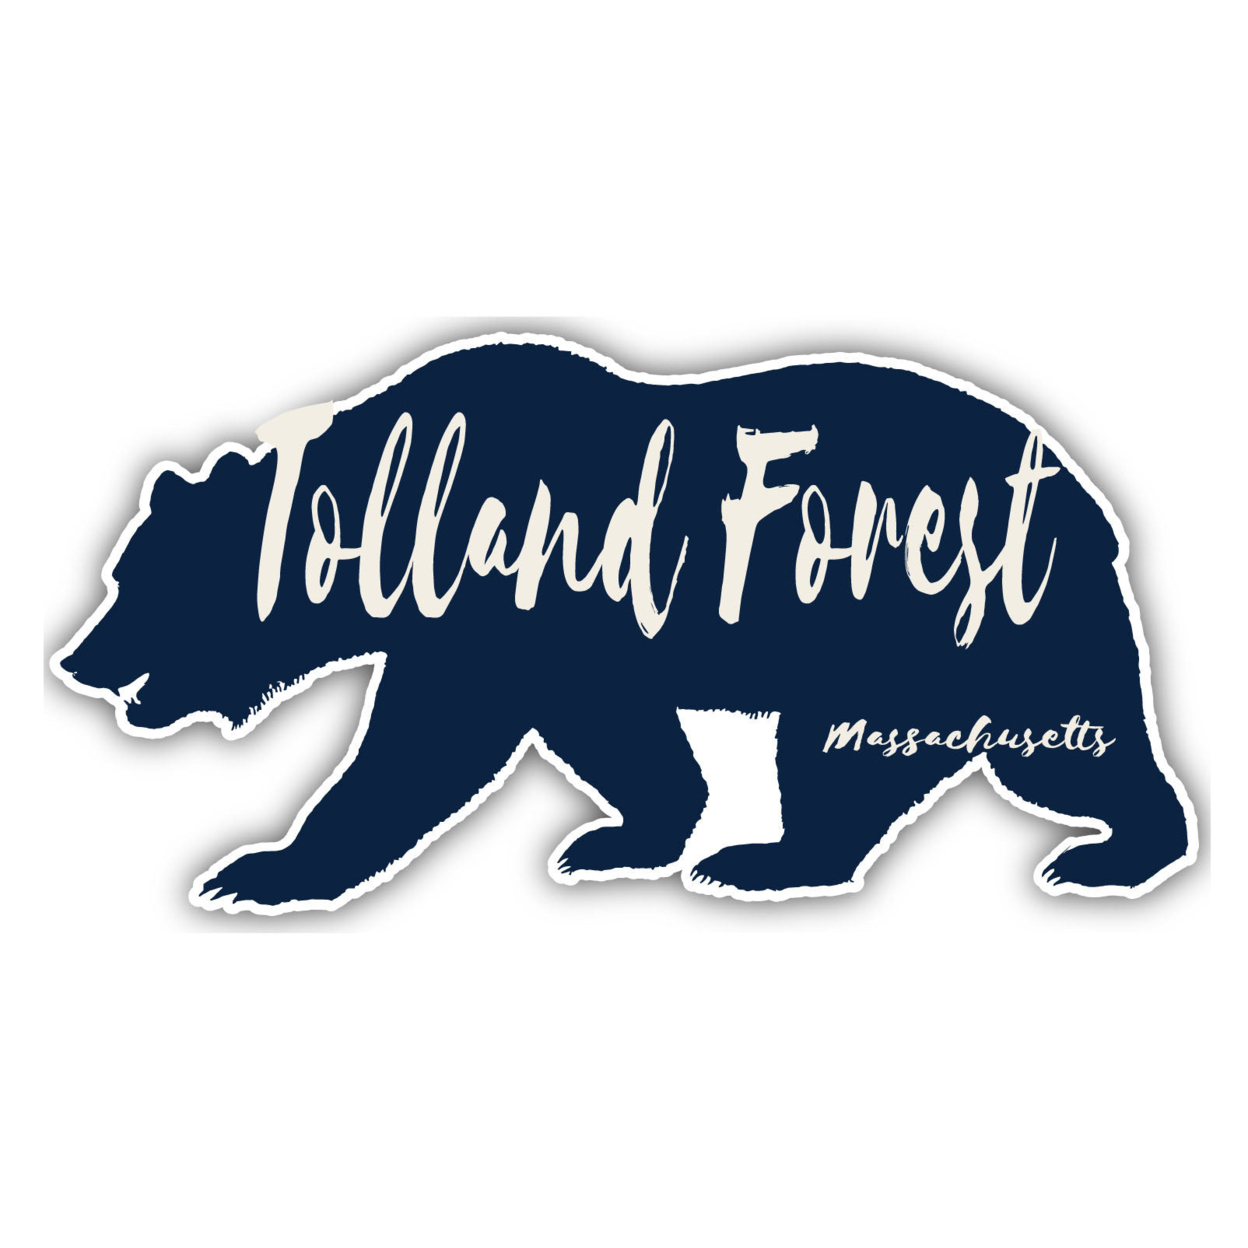 Tolland Forest Massachusetts Souvenir Decorative Stickers (Choose Theme And Size) - Single Unit, 2-Inch, Bear